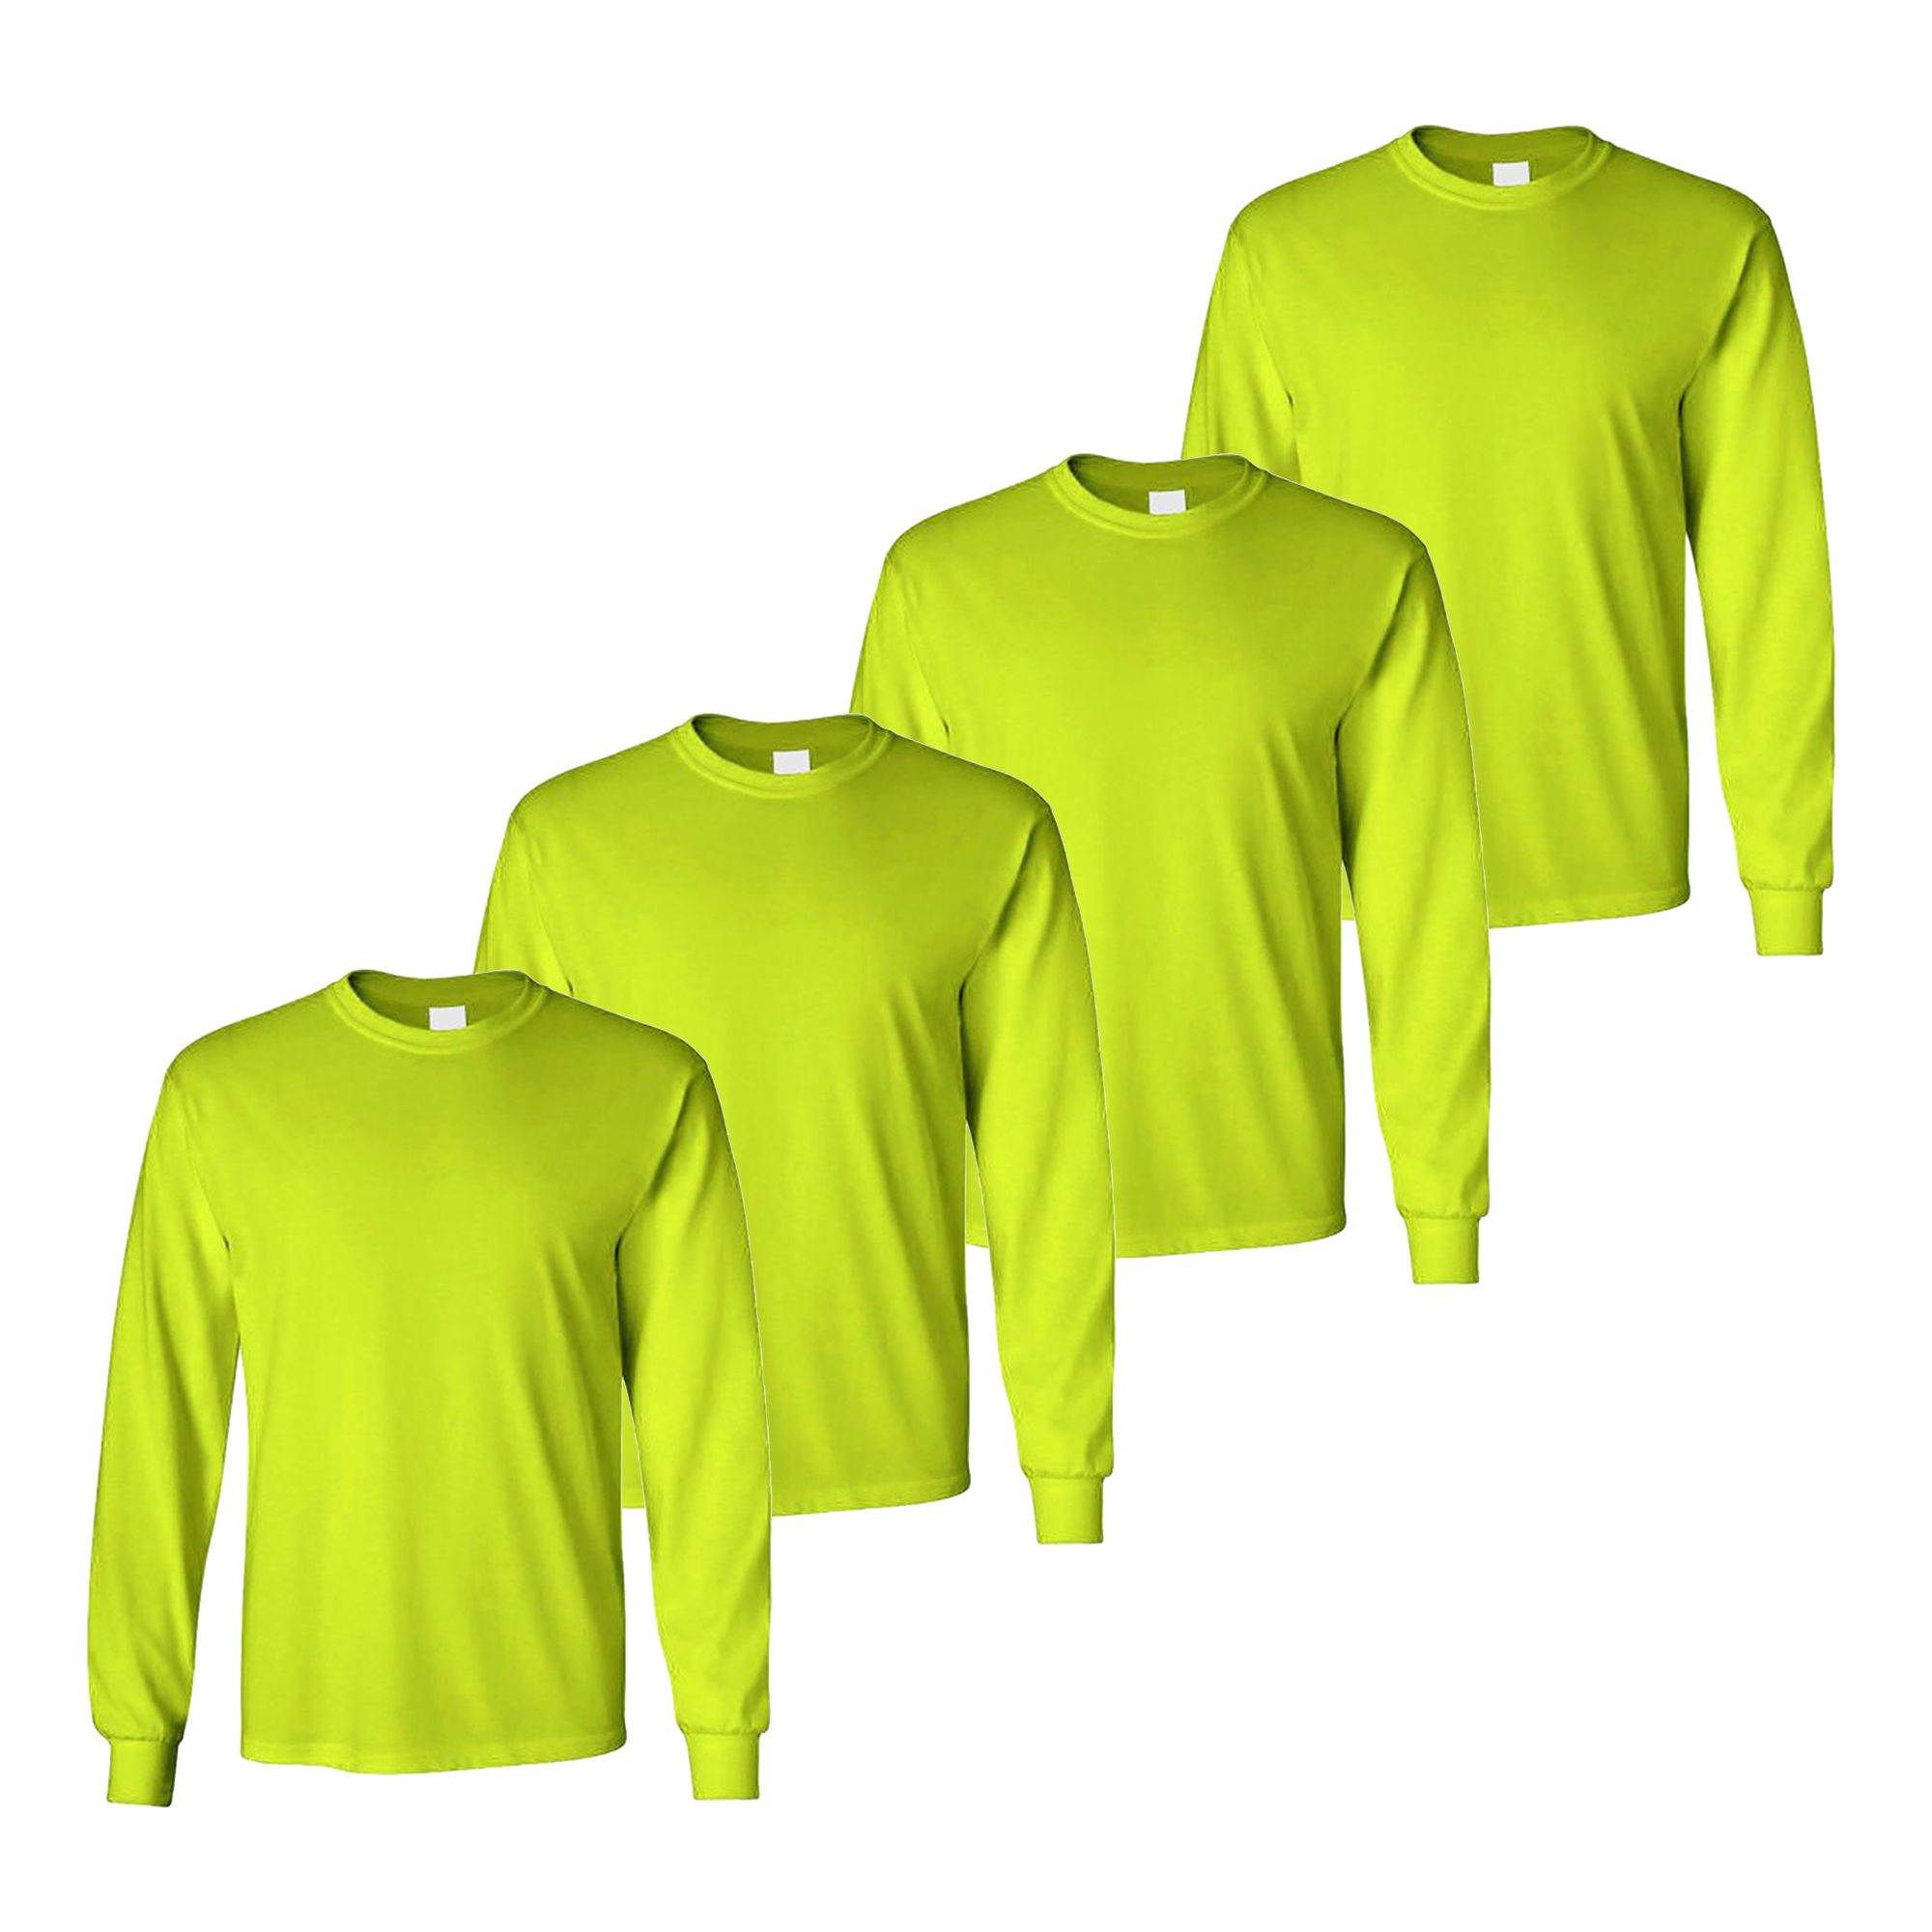 Long Sleeve Safety Green Construction T-Shirts for Men, Ropa de trabajo ...